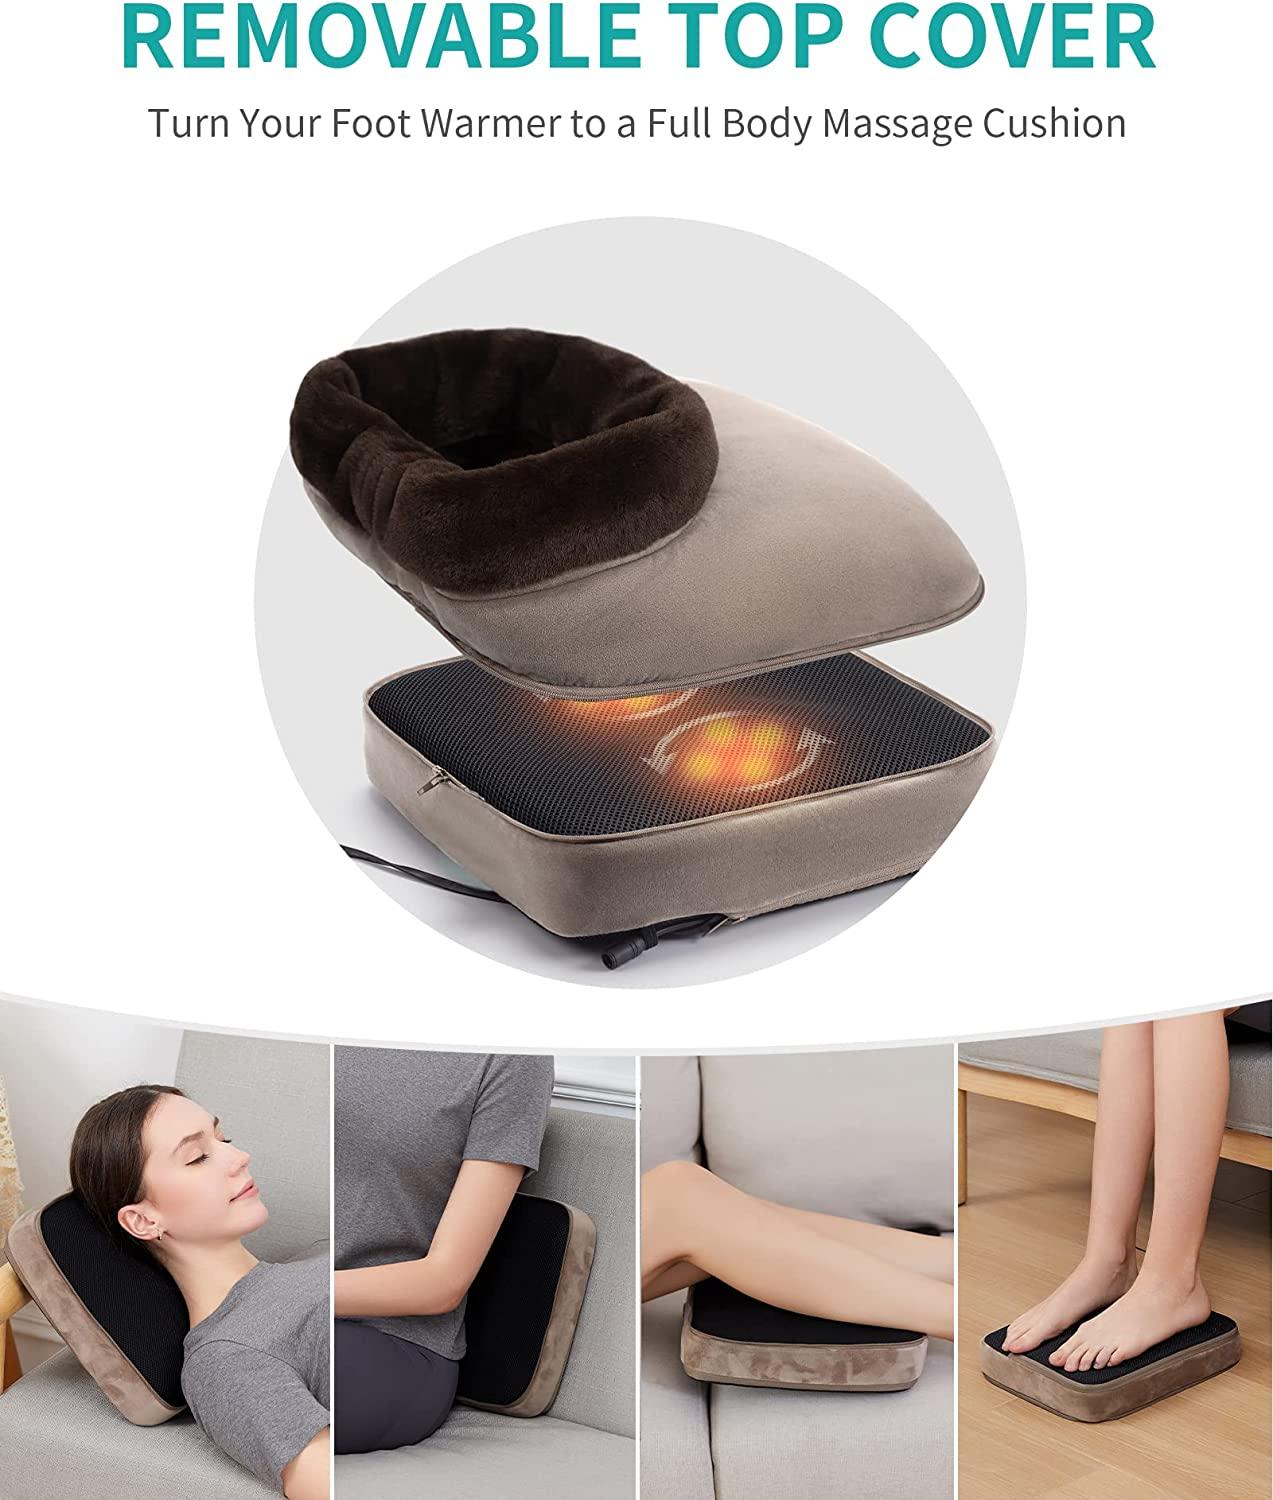 Nekteck Cordless Rechargeable Shiatsu Deep Kneading Massage Pillow